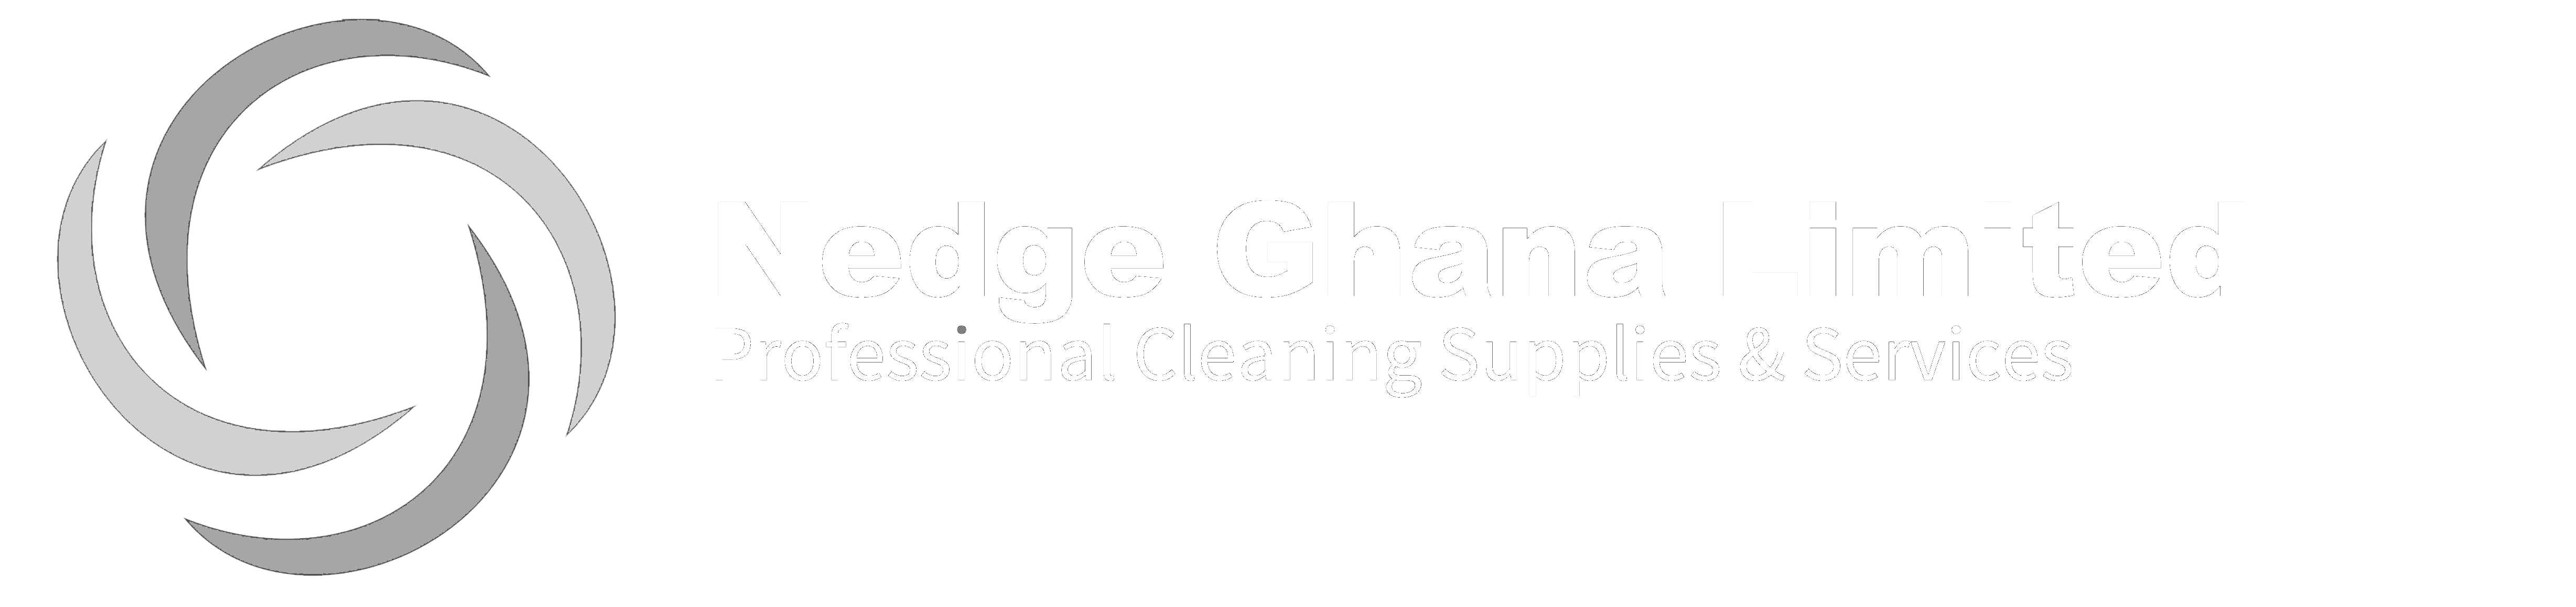 Nedge Ghana Limited